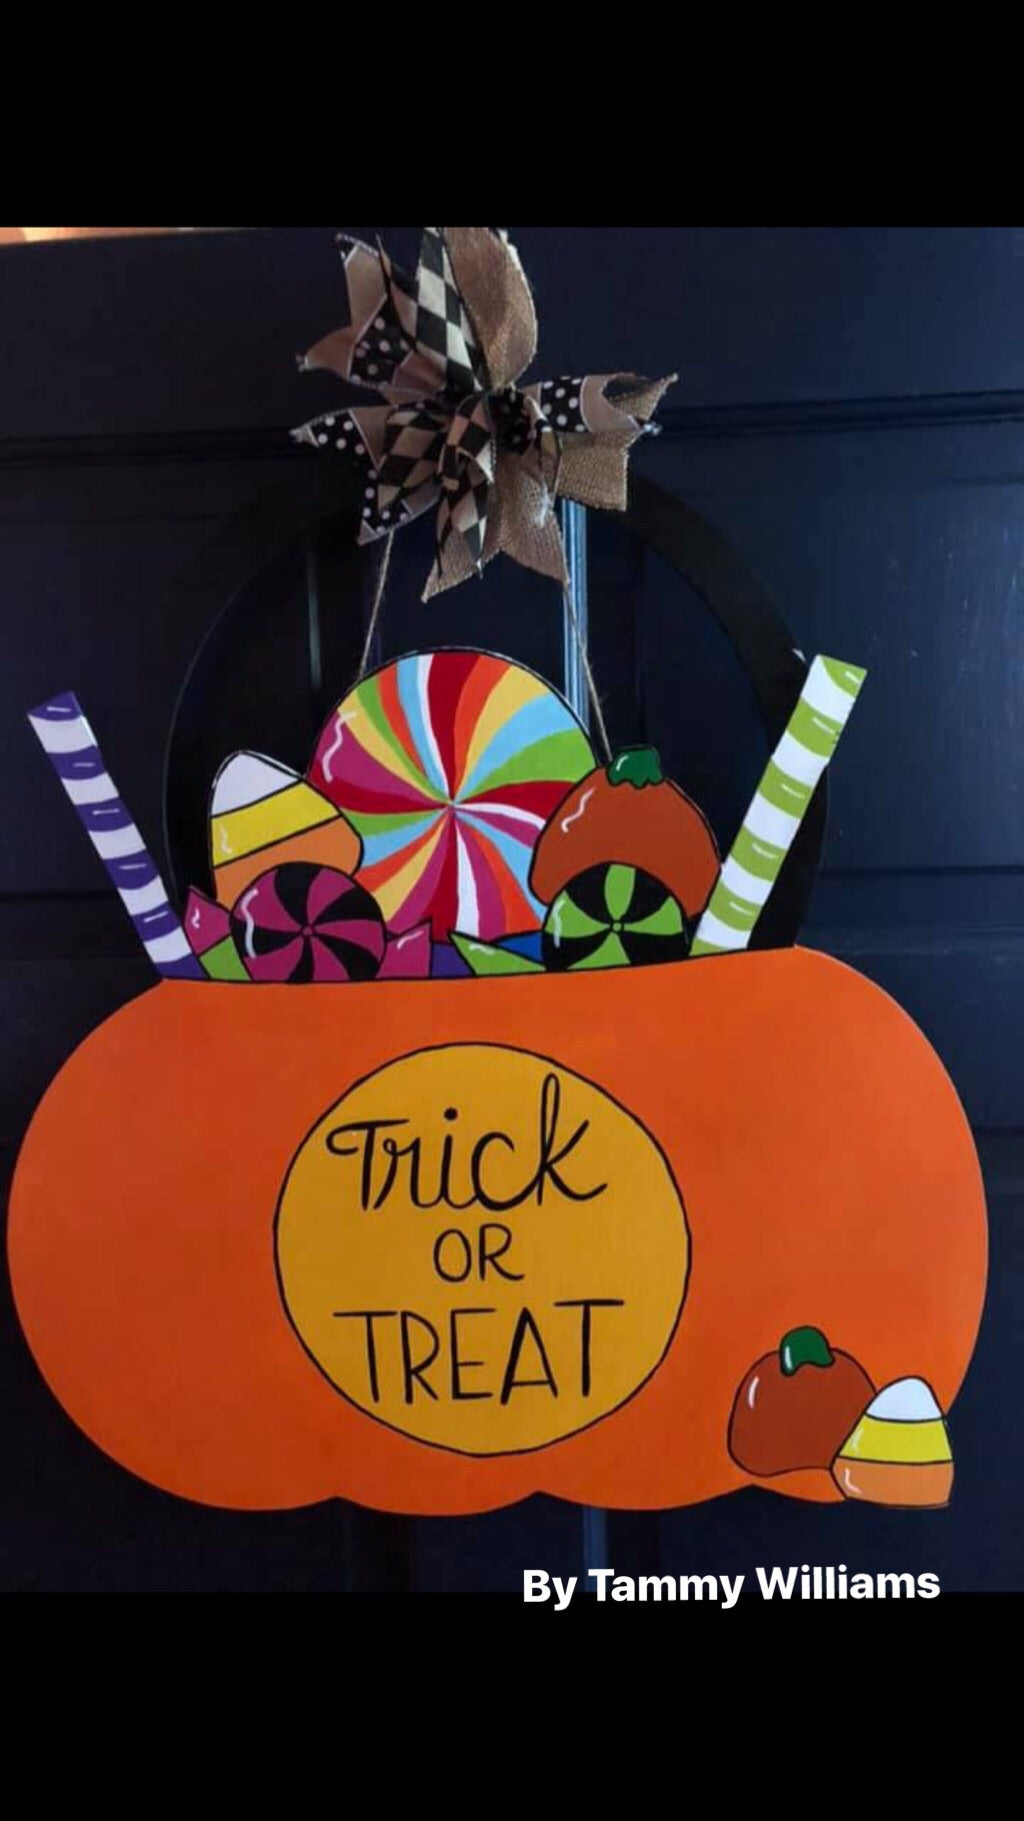 Trick or Treat Pumpkin Template & Digital Cut File